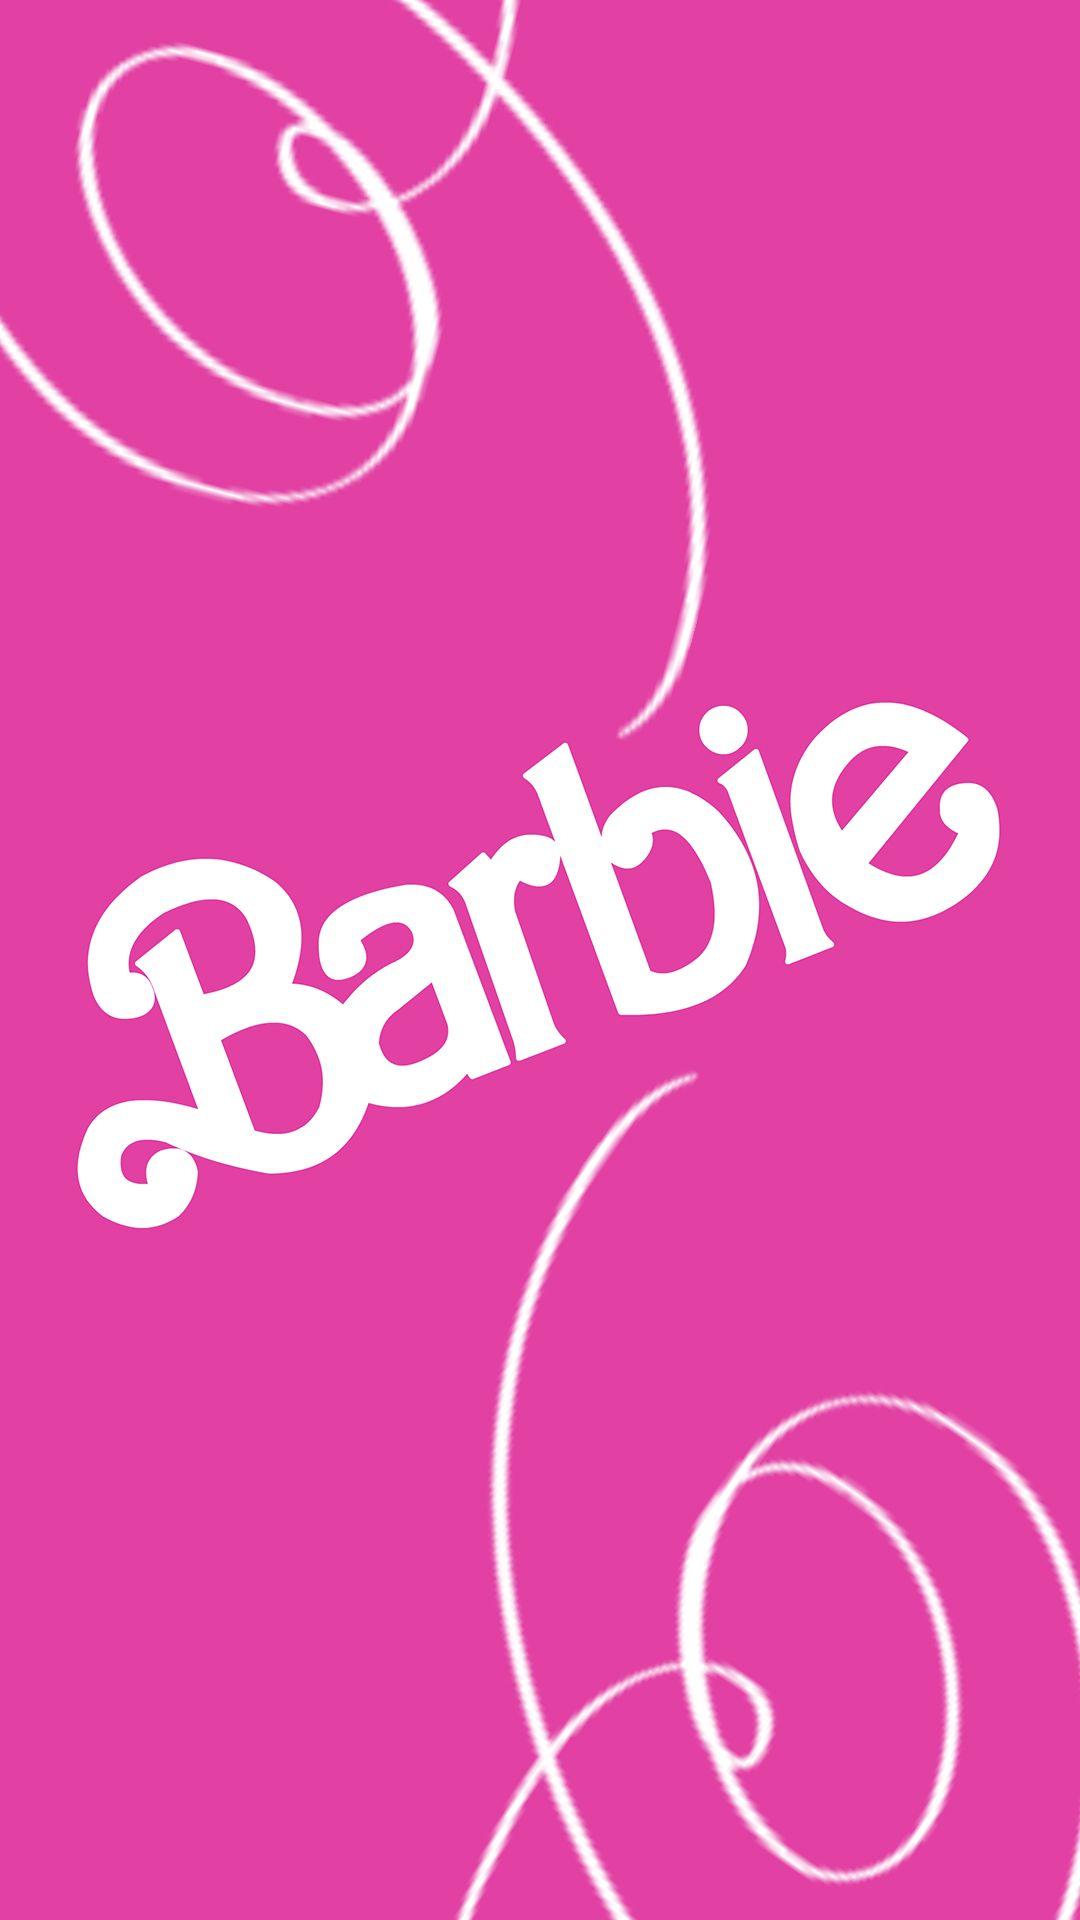 Barbie Phone Wallpaper. Barbie, Cellphone wallpaper, Cool